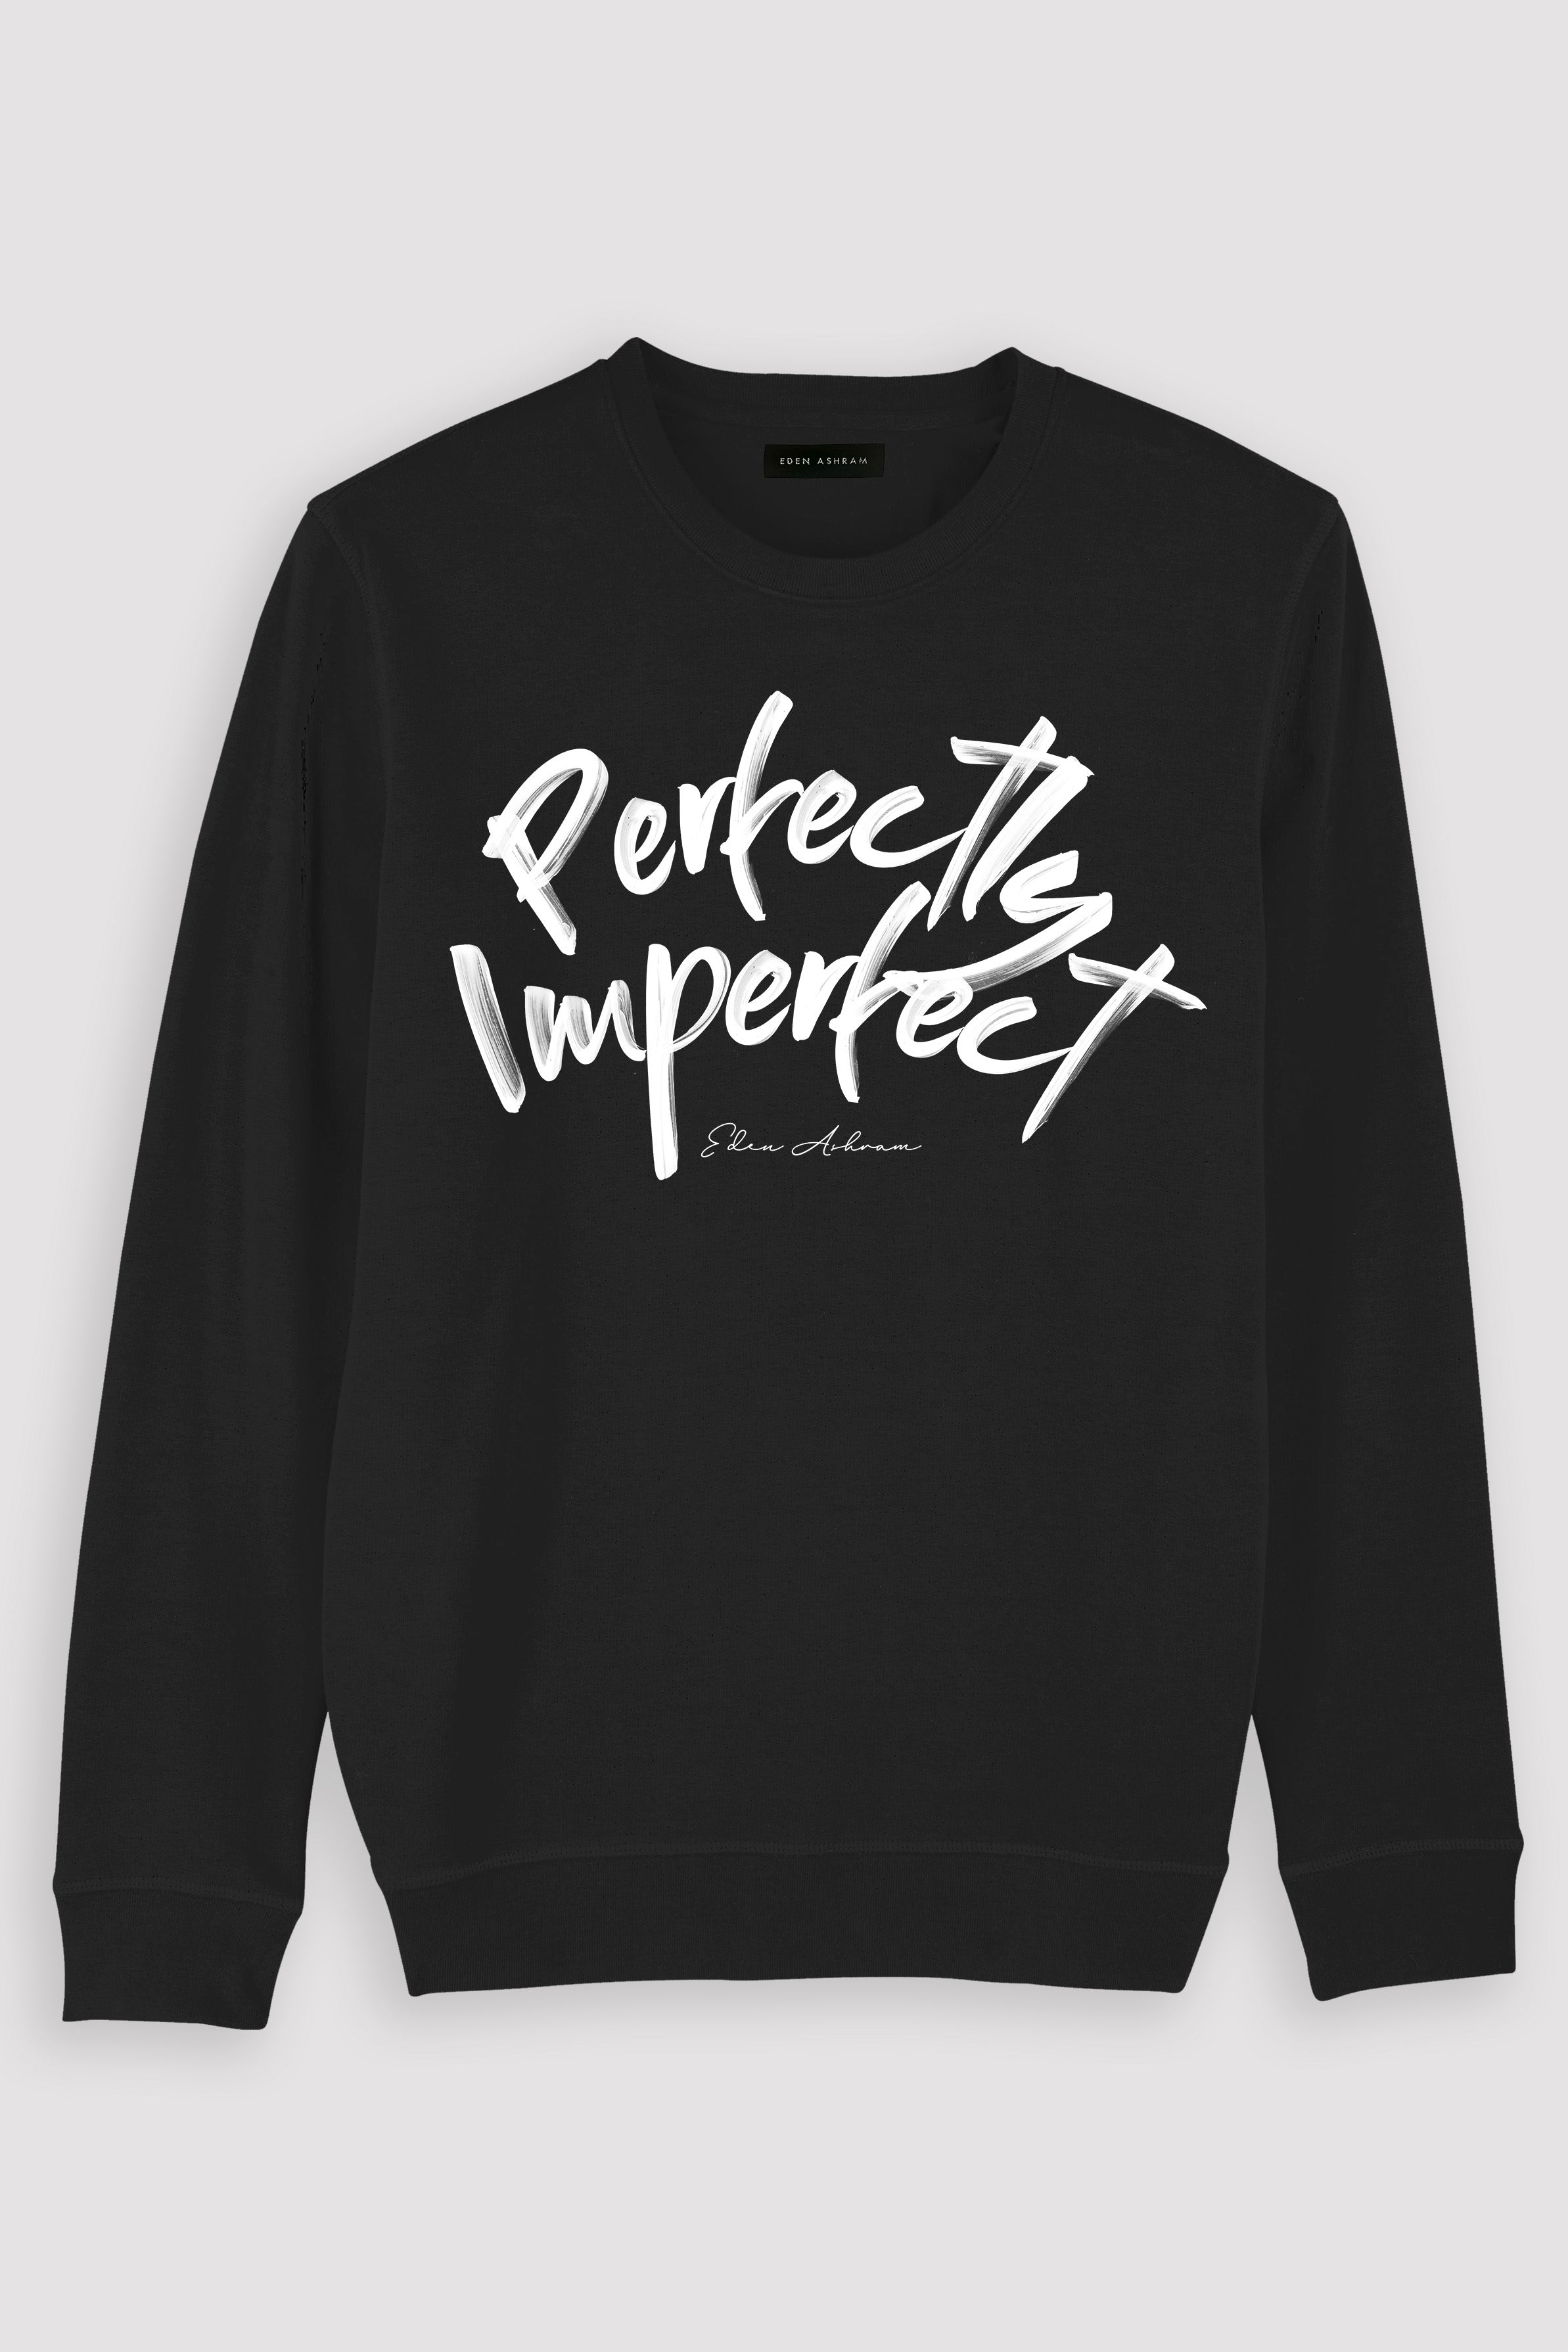 Eden Ashram Perfectly Imperfect Premium Crew Neck Sweatshirt Black